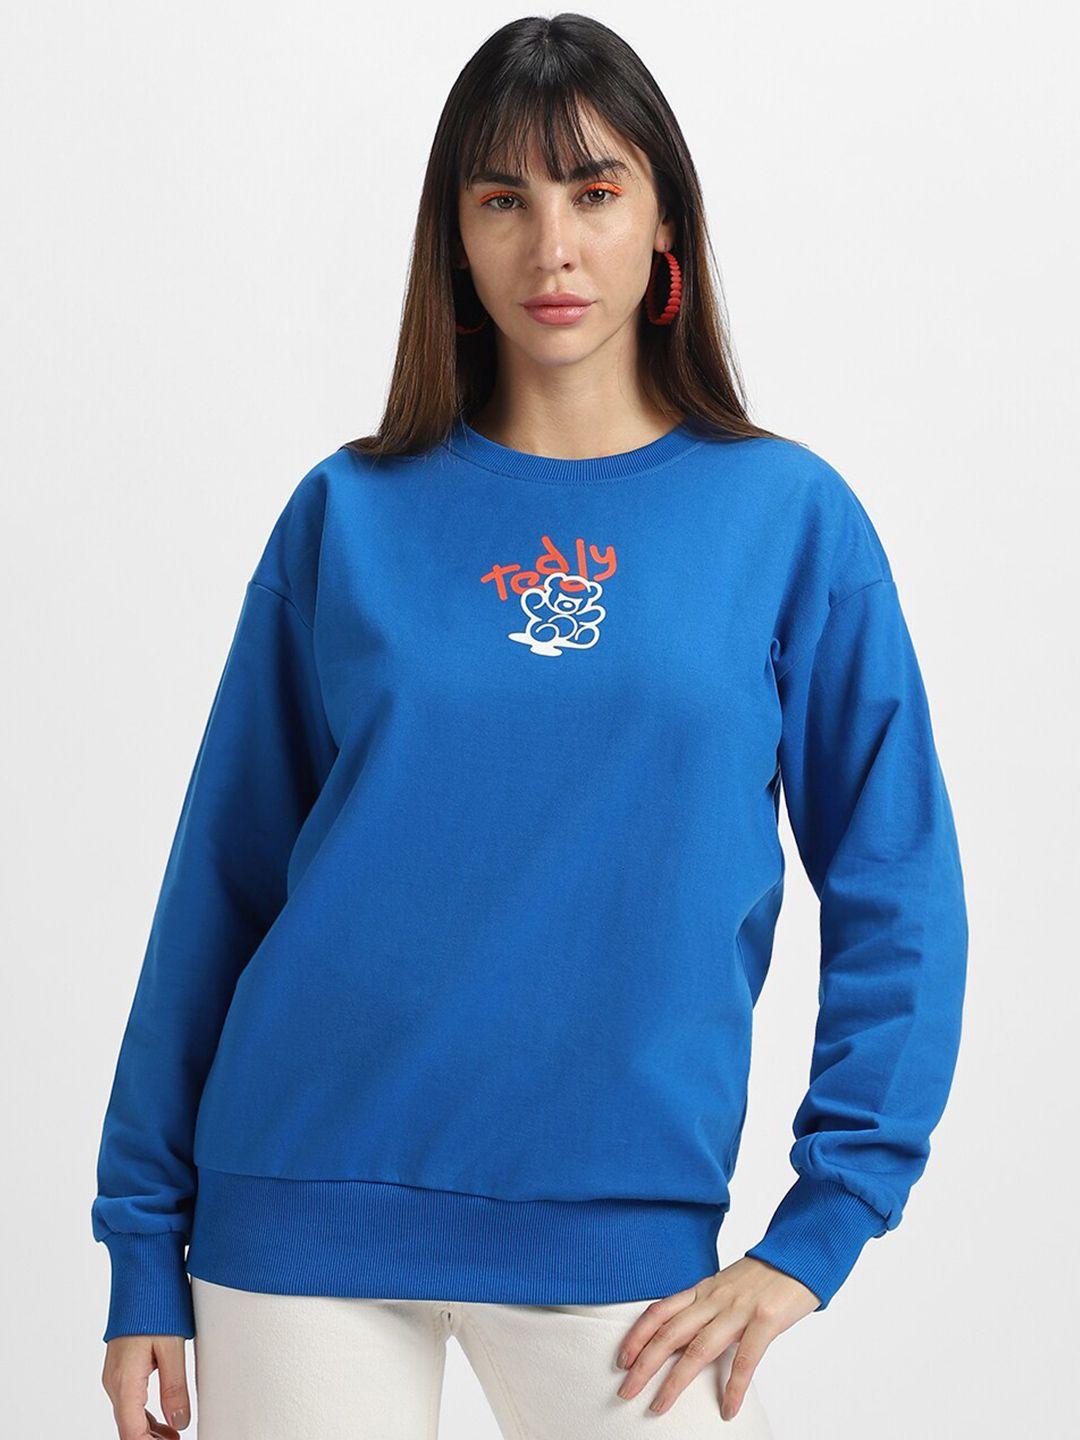 juneberry-graphic-printed-fleece-oversized-pullover-sweatshirt